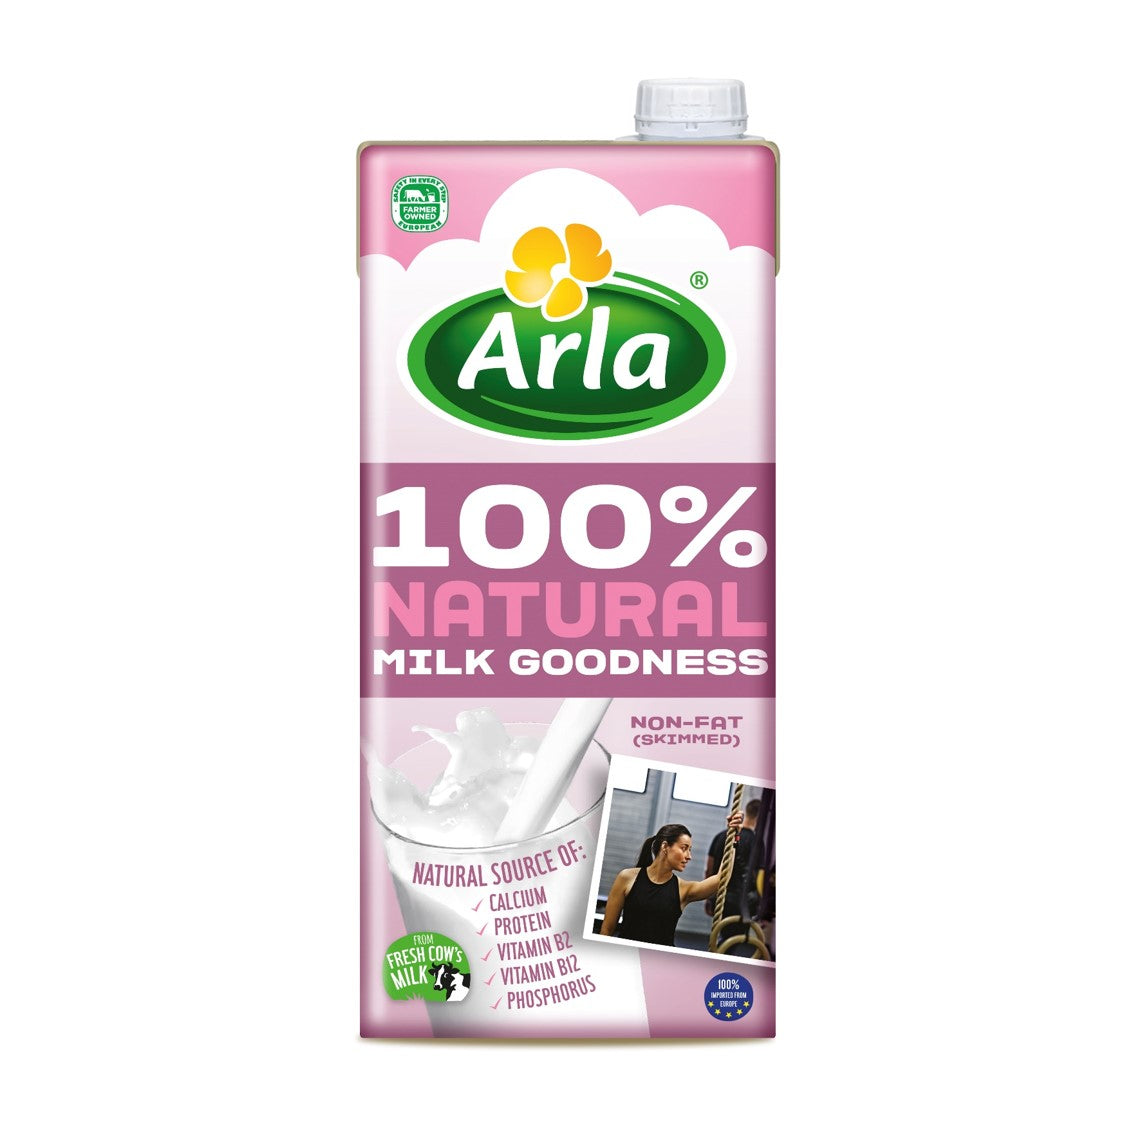 Arla Milk Goodness Skimmed Milk (1L)